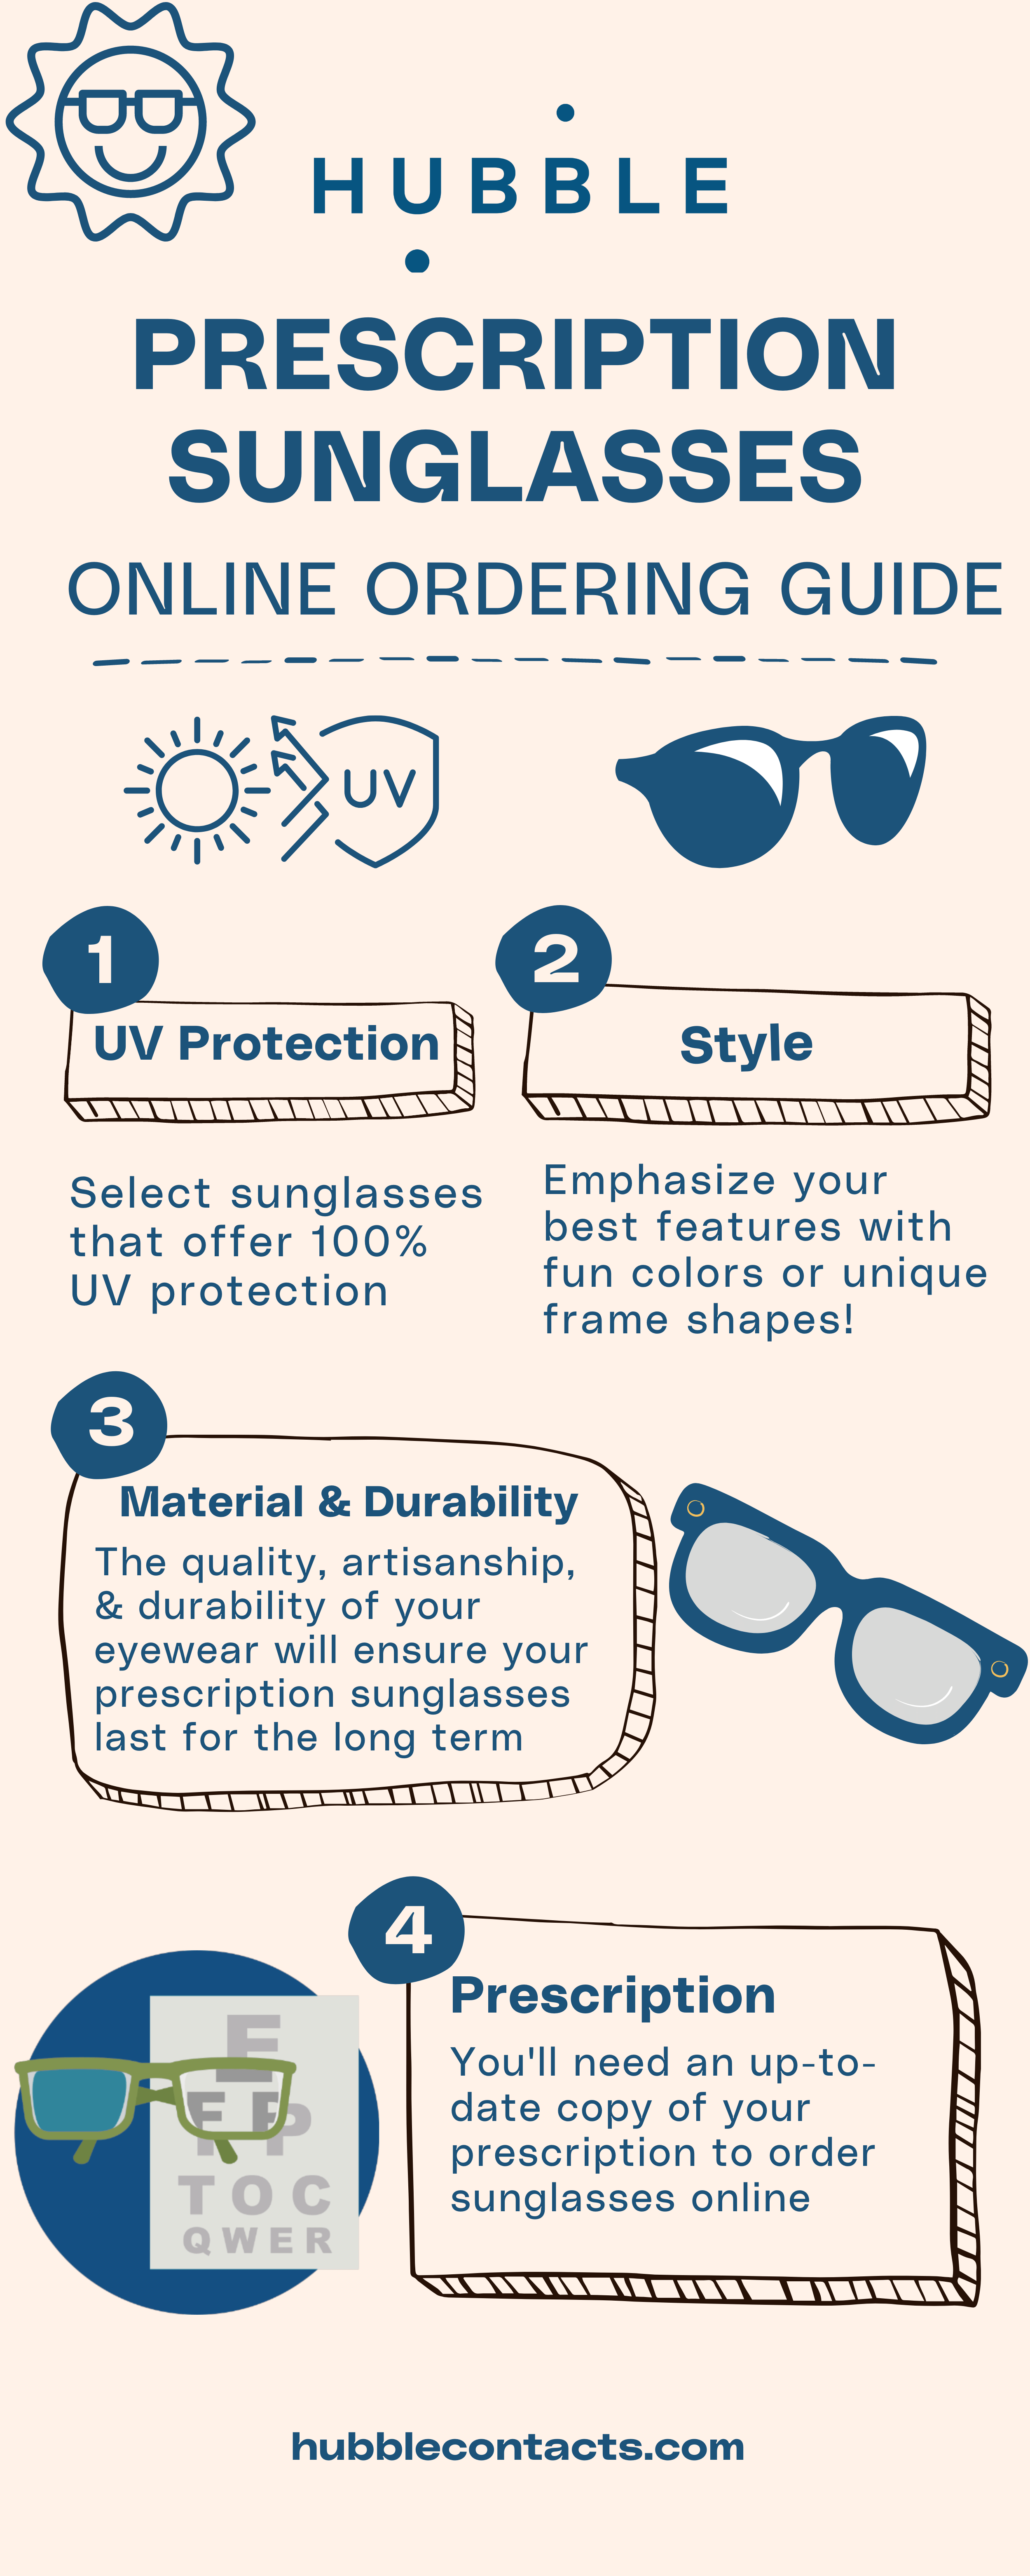 L.L.Bean Sport Over The Glasses Polarized Sunglasses | Sunglasses at  L.L.Bean